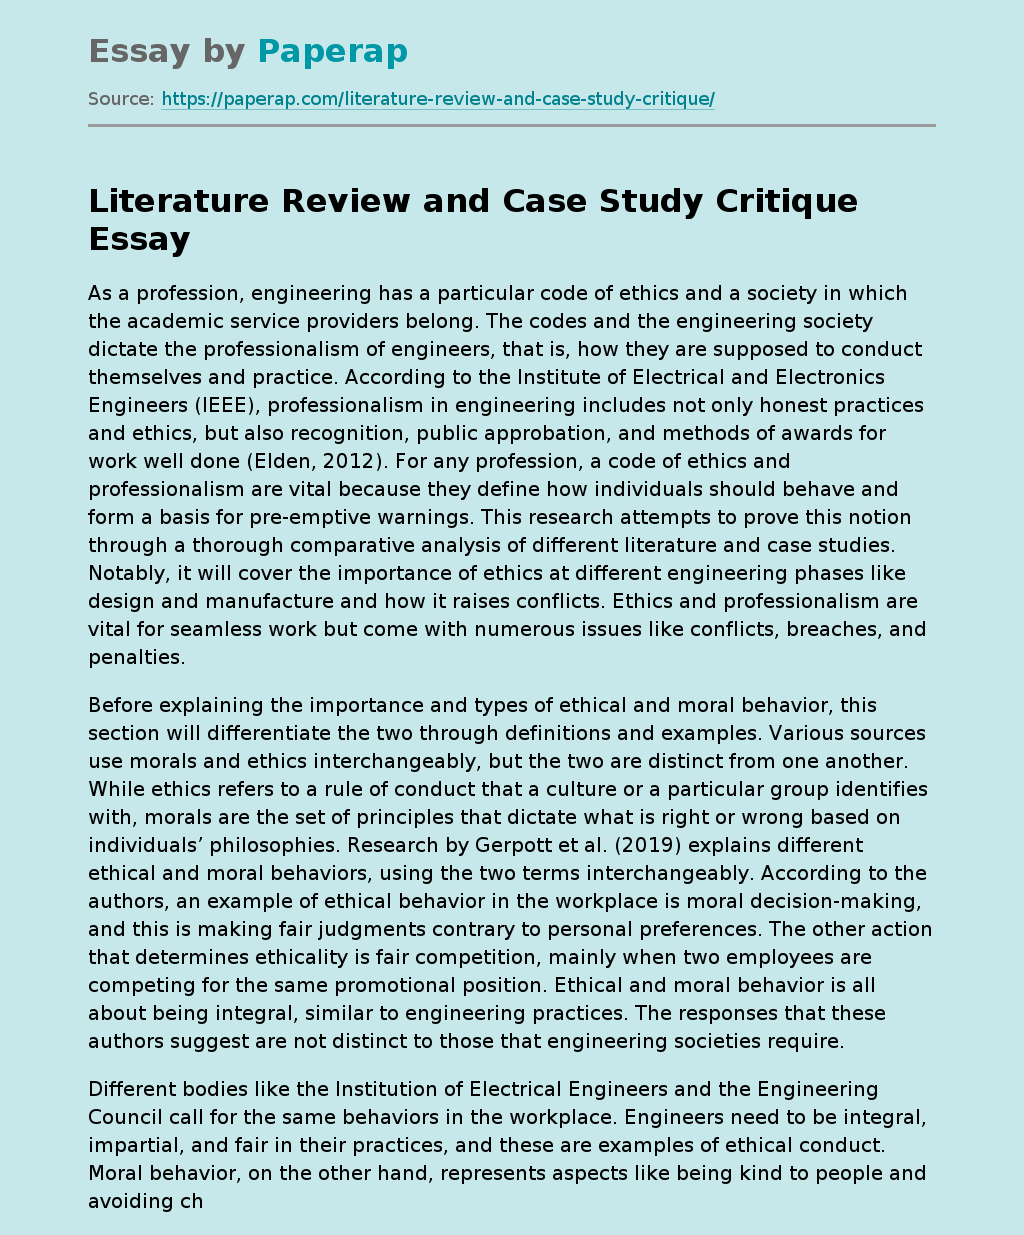 Literature Review and Case Study Critique